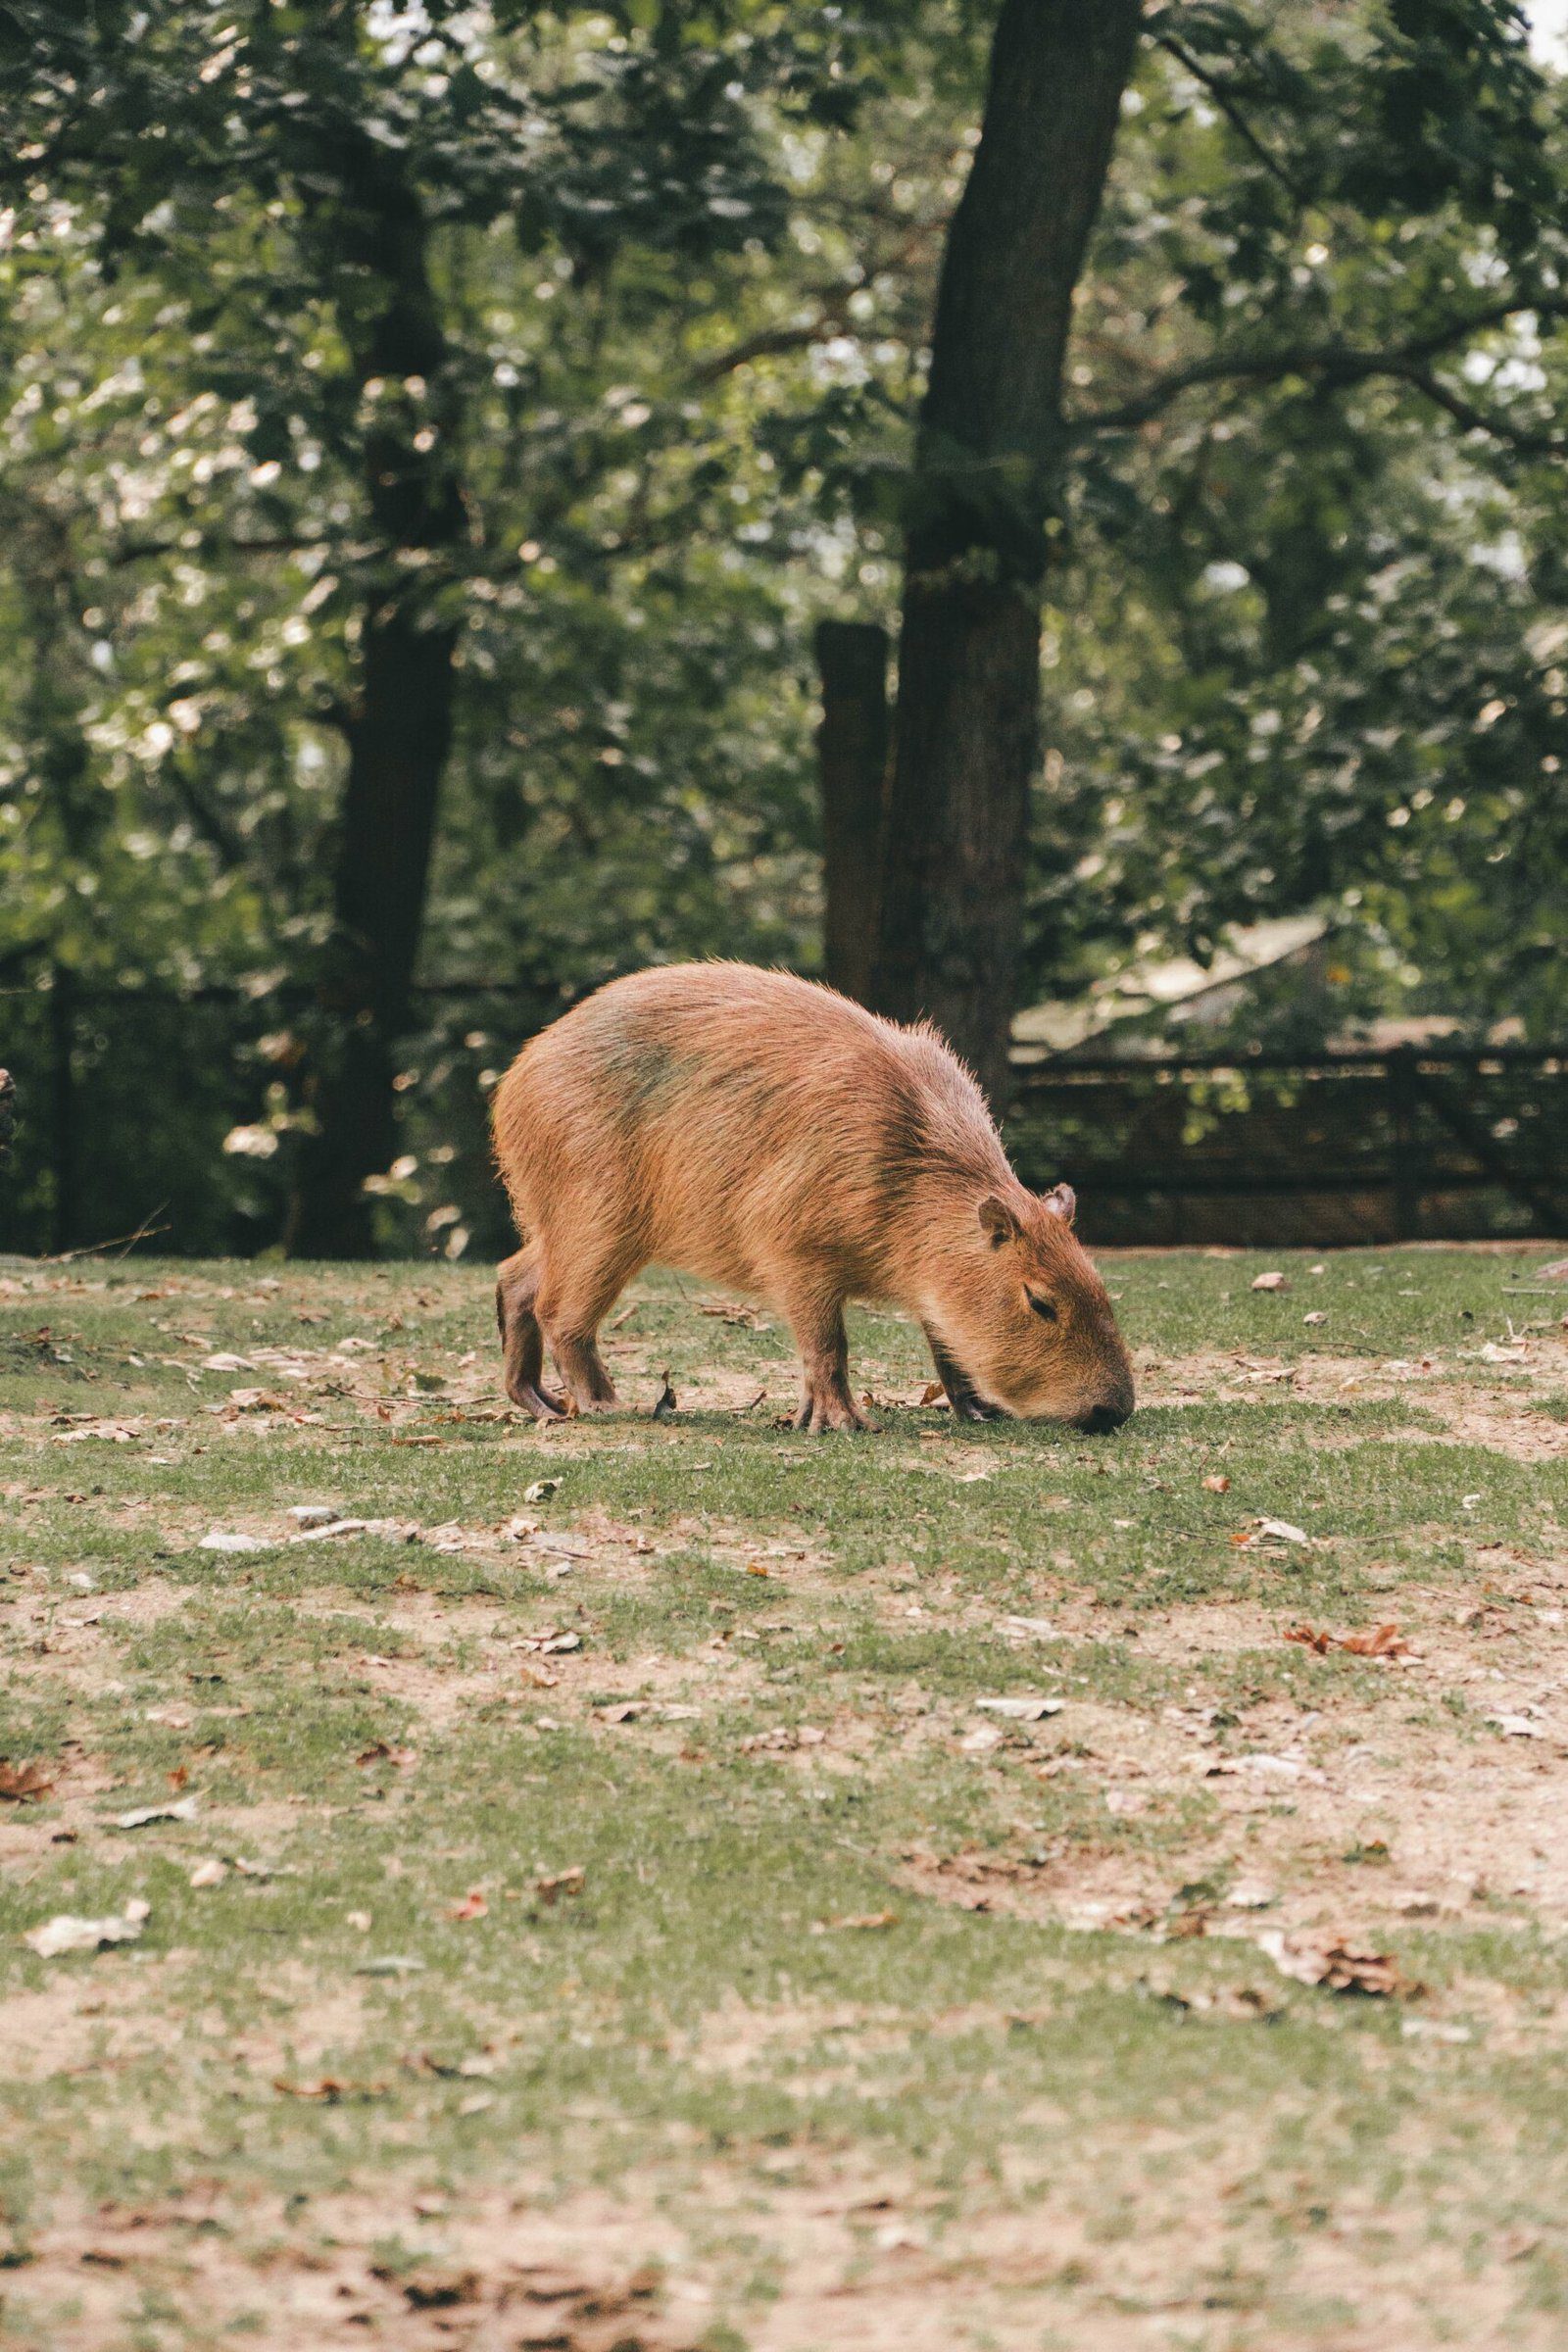 Average Weight of a Capybara